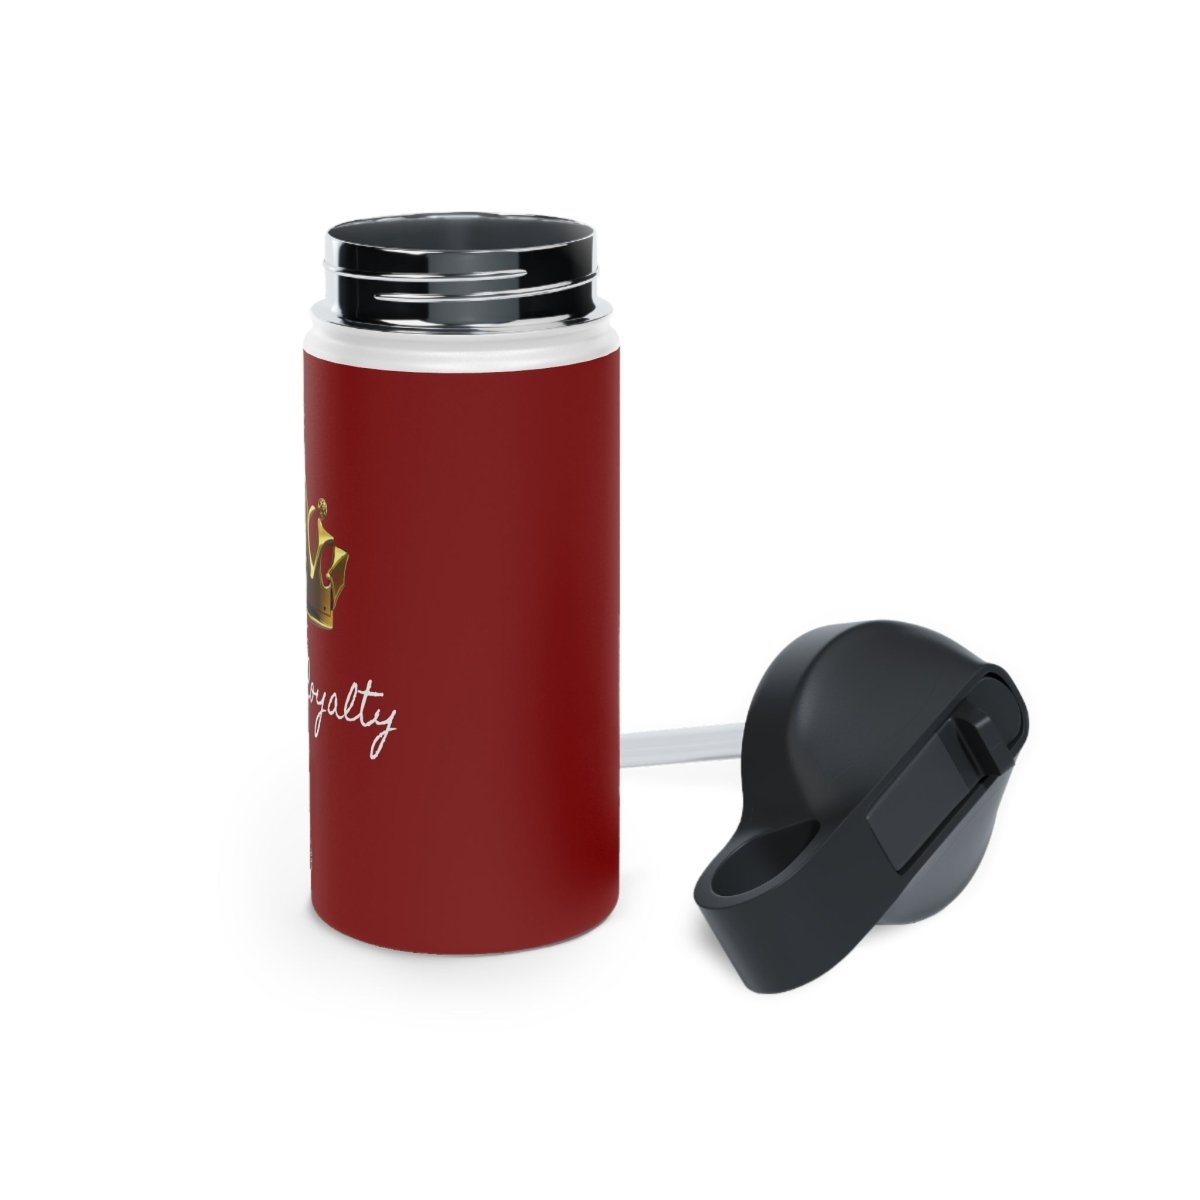 Royal Crown Stainless Steel Water Bottle - I Am Royalty (Standard Lid - Dark Red) - DarzyStore